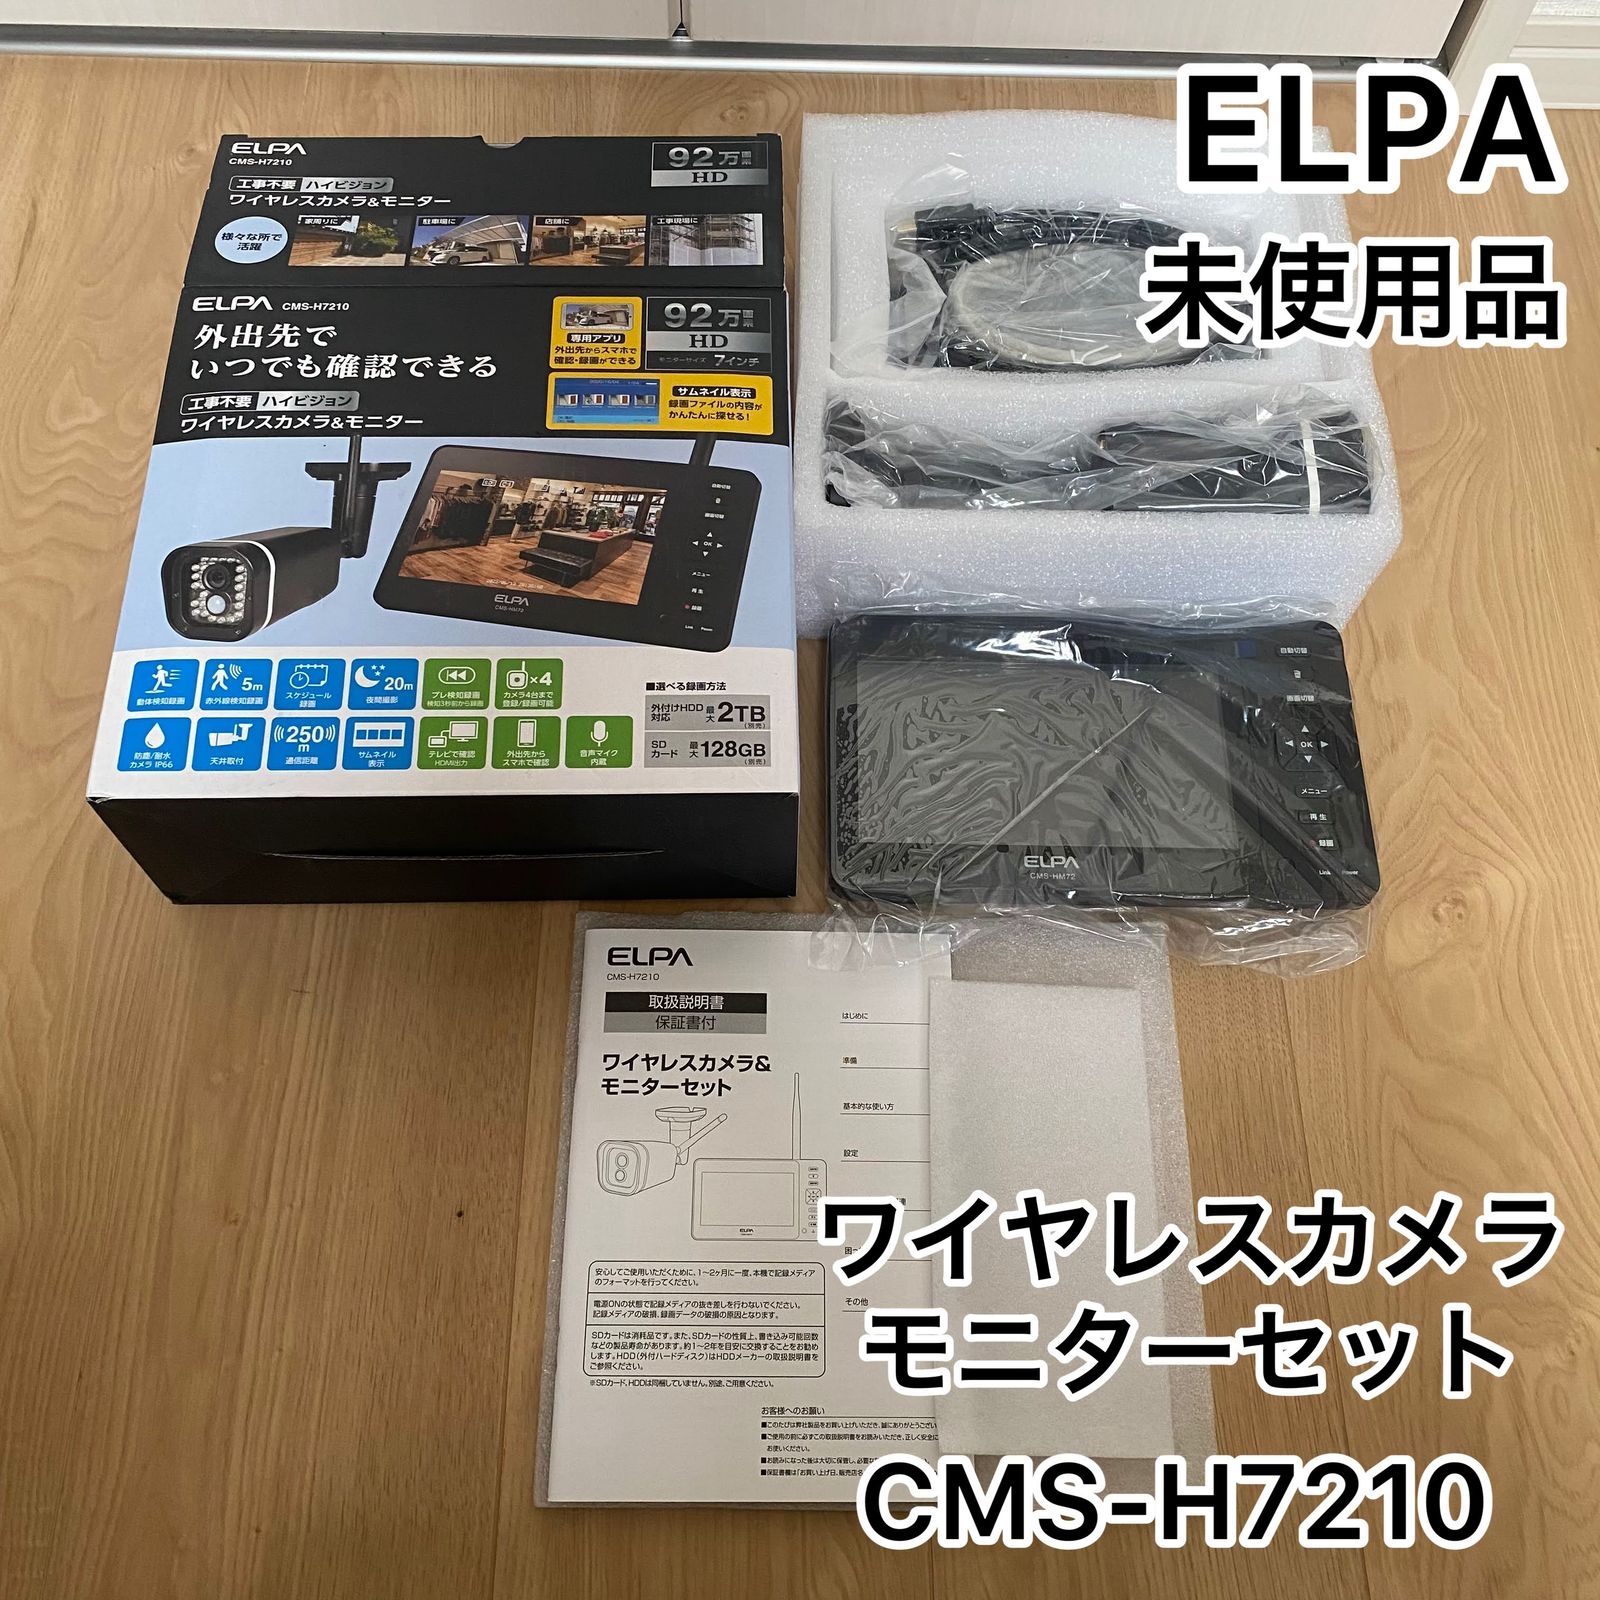 ELPA CMS-H7210 ワイヤレスカメラモニター - 防犯カメラ